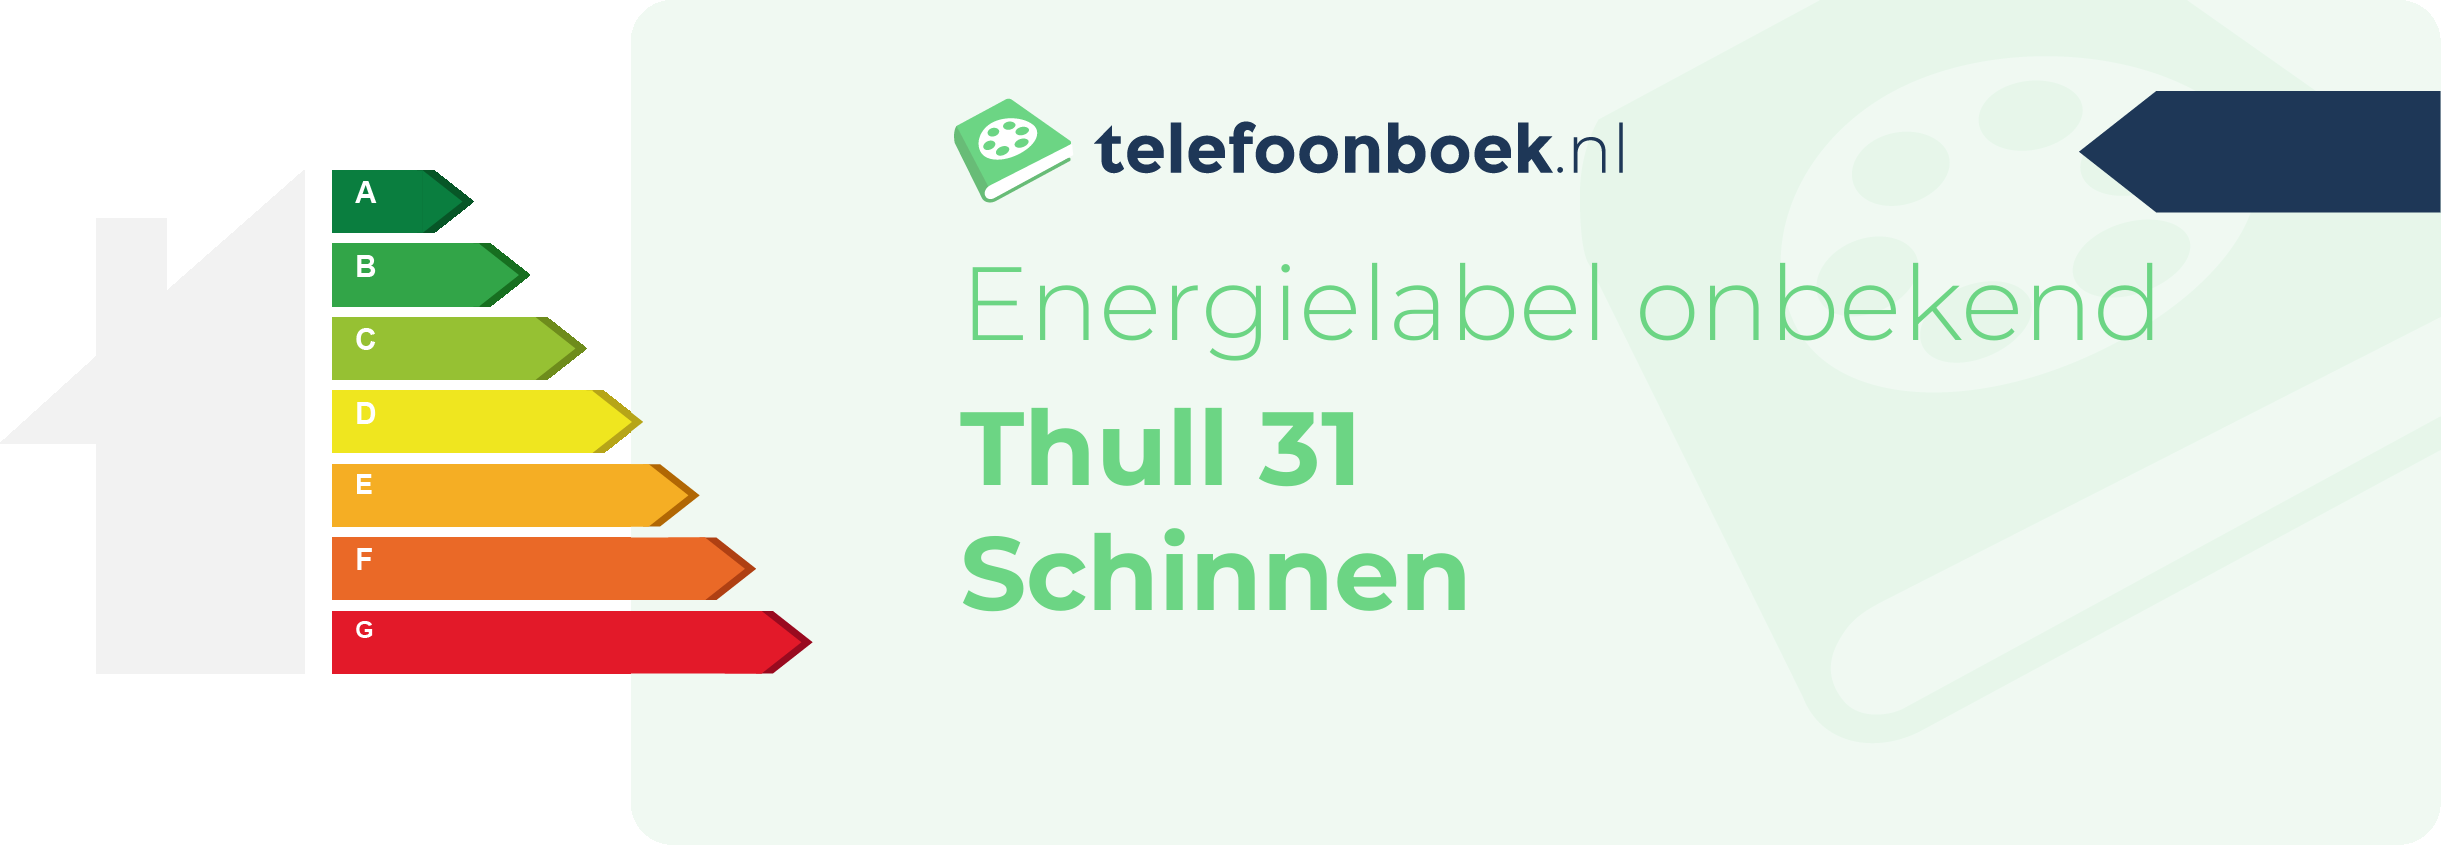 Energielabel Thull 31 Schinnen